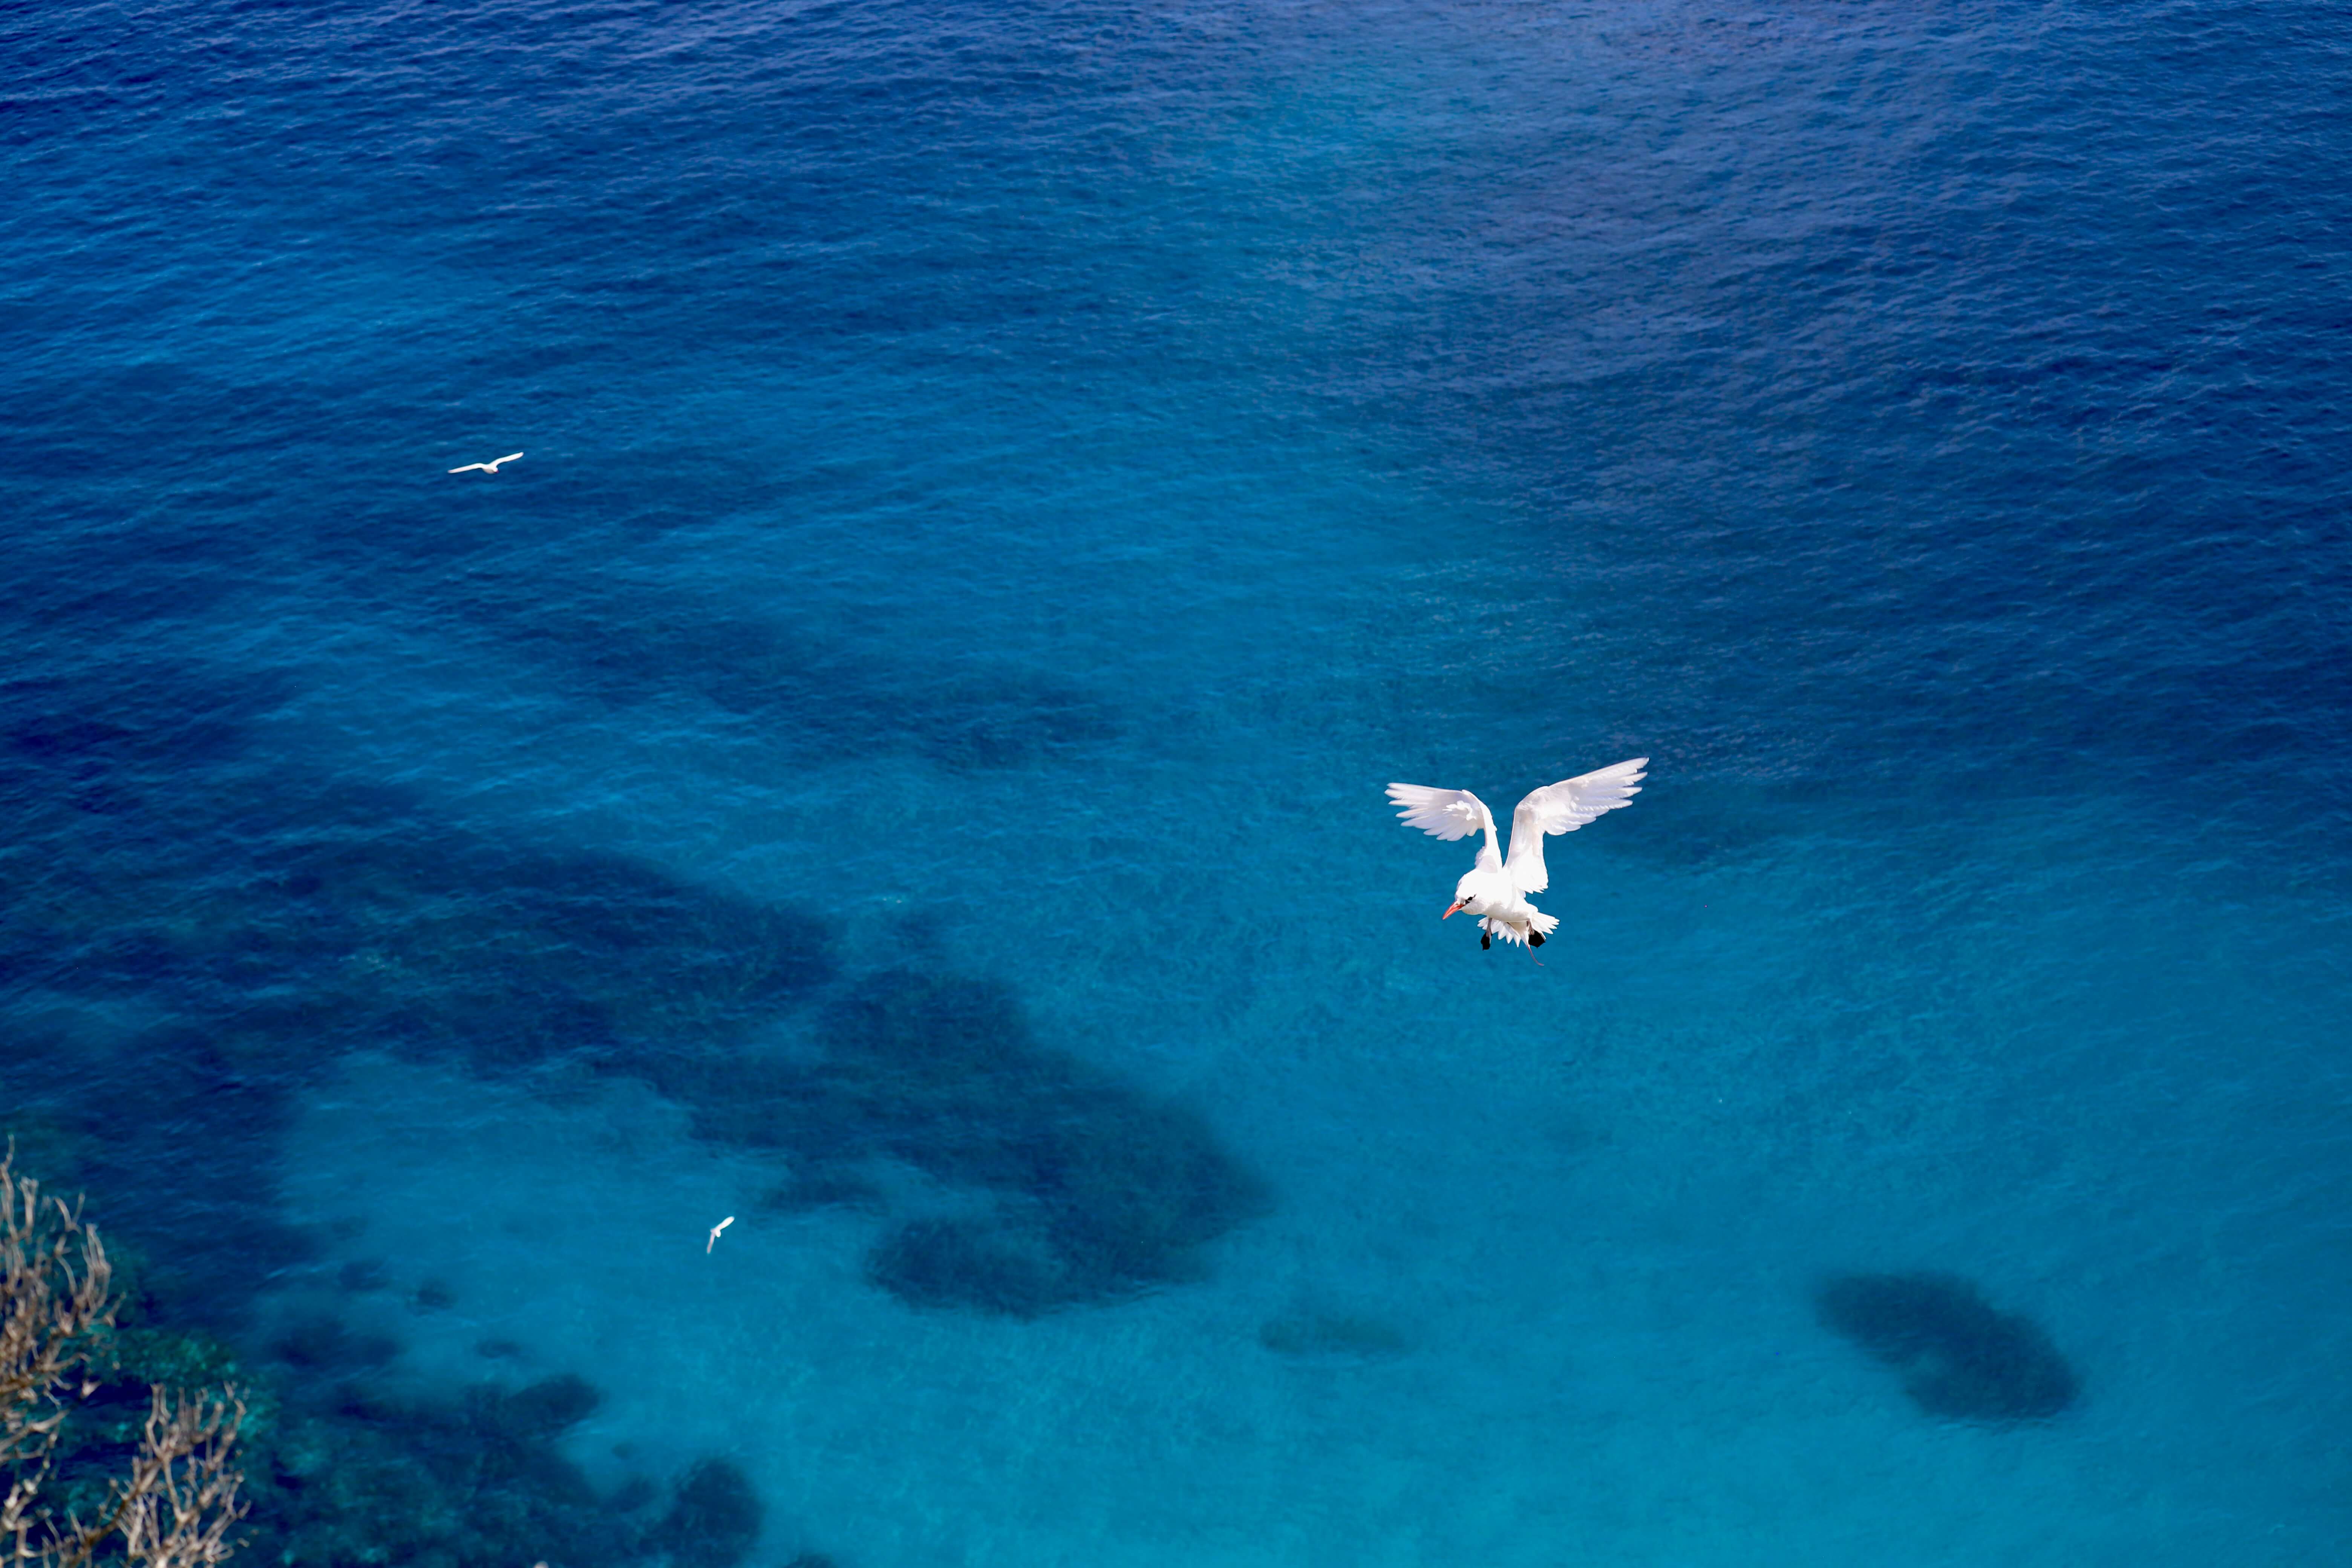 White bird flying on a background of dark blue ocean